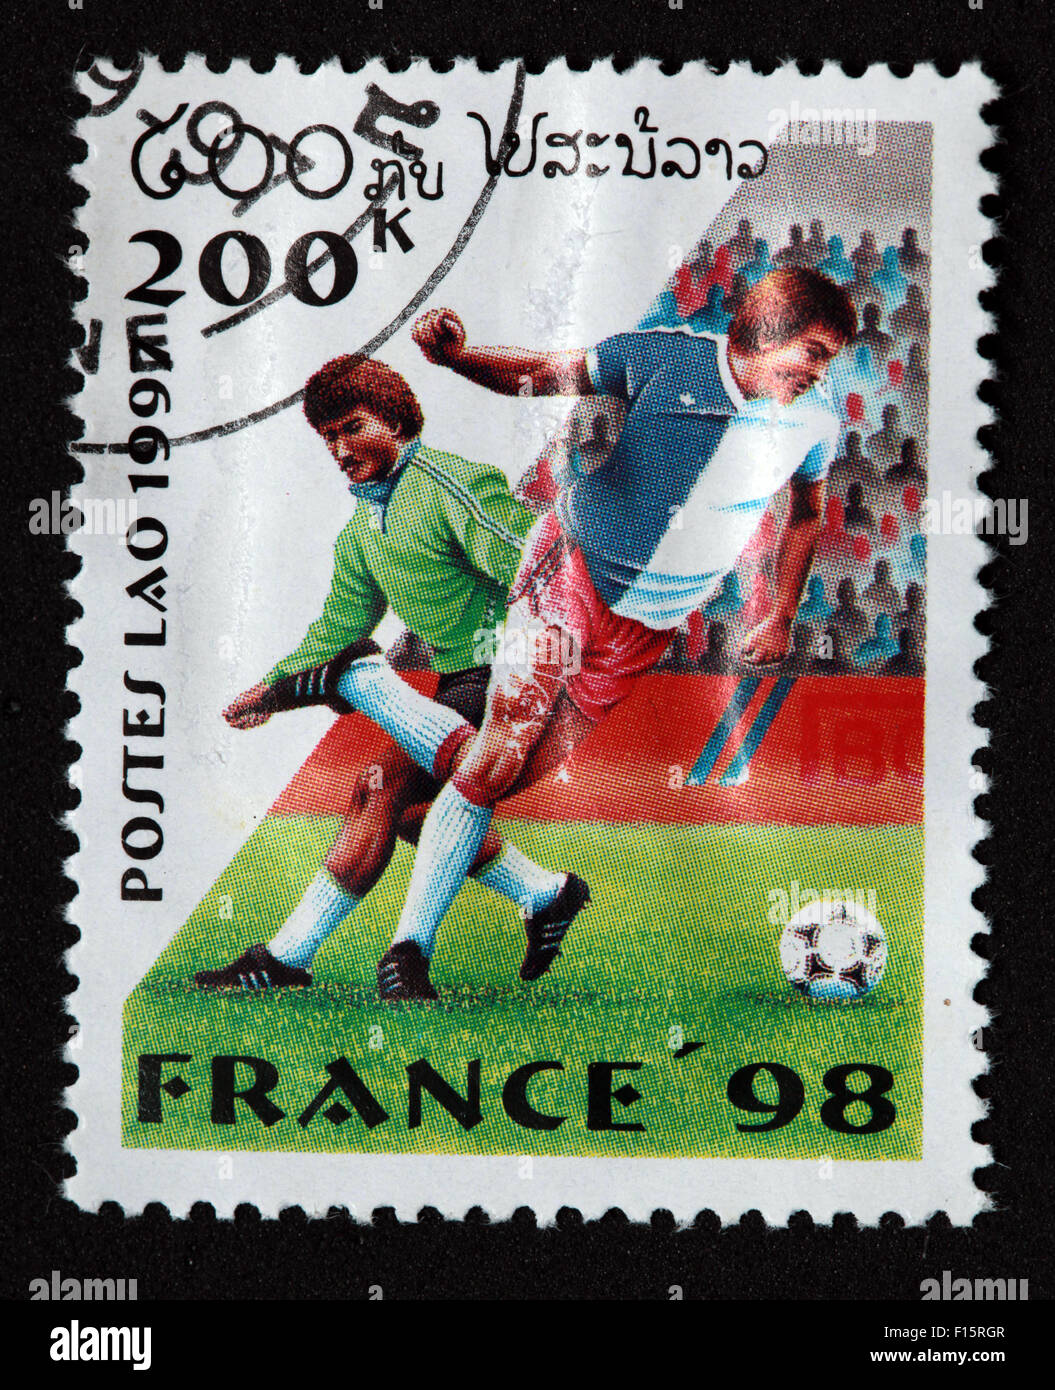 Postes Laos Laos 200K Frankreich 1998 98 Fußball Deportes World Cup Worldcup Sport Stempel Stockfoto